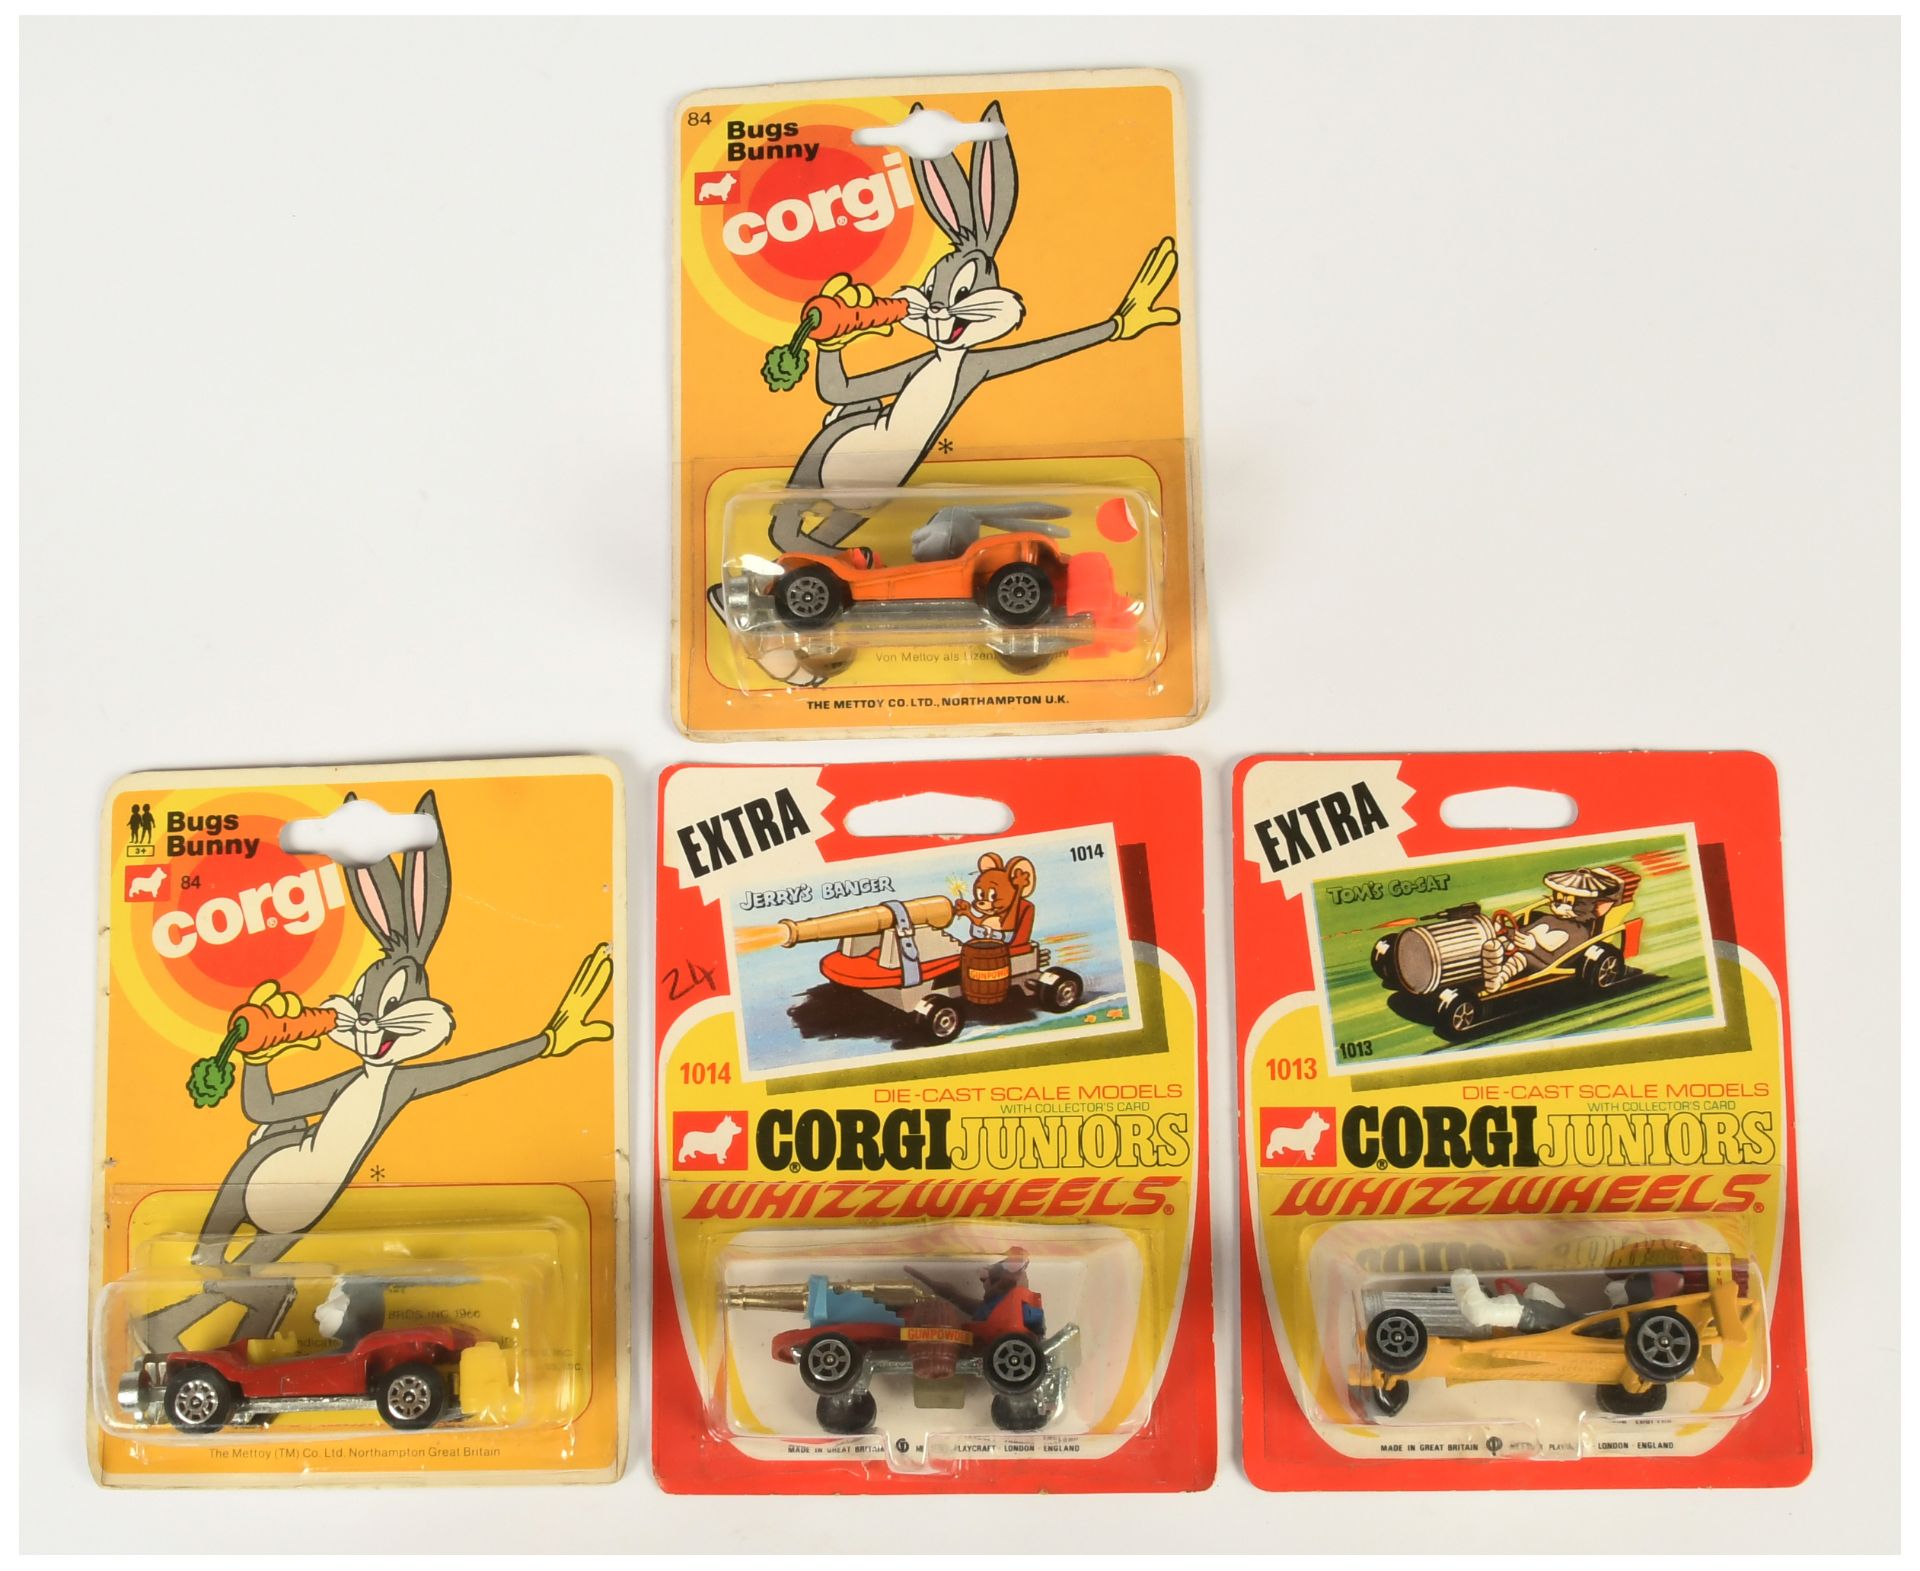 Corgi Juniors Group Of 4 To Include (10 84 "Bugs Bunny" Car - Orange Body with fluorescent plasti...